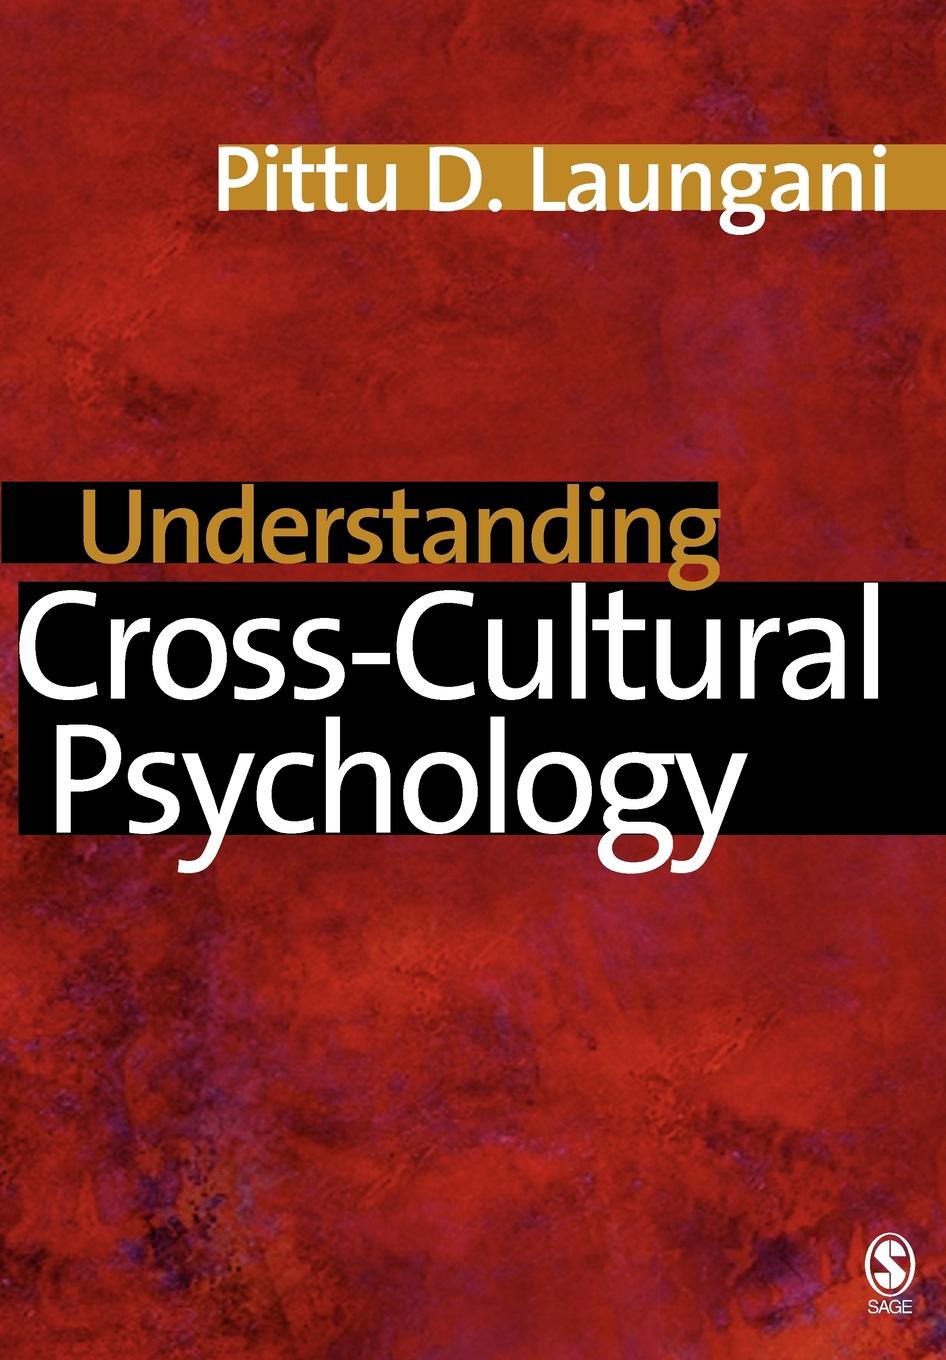 Understanding cultures. Cross-Cultural Psychology.